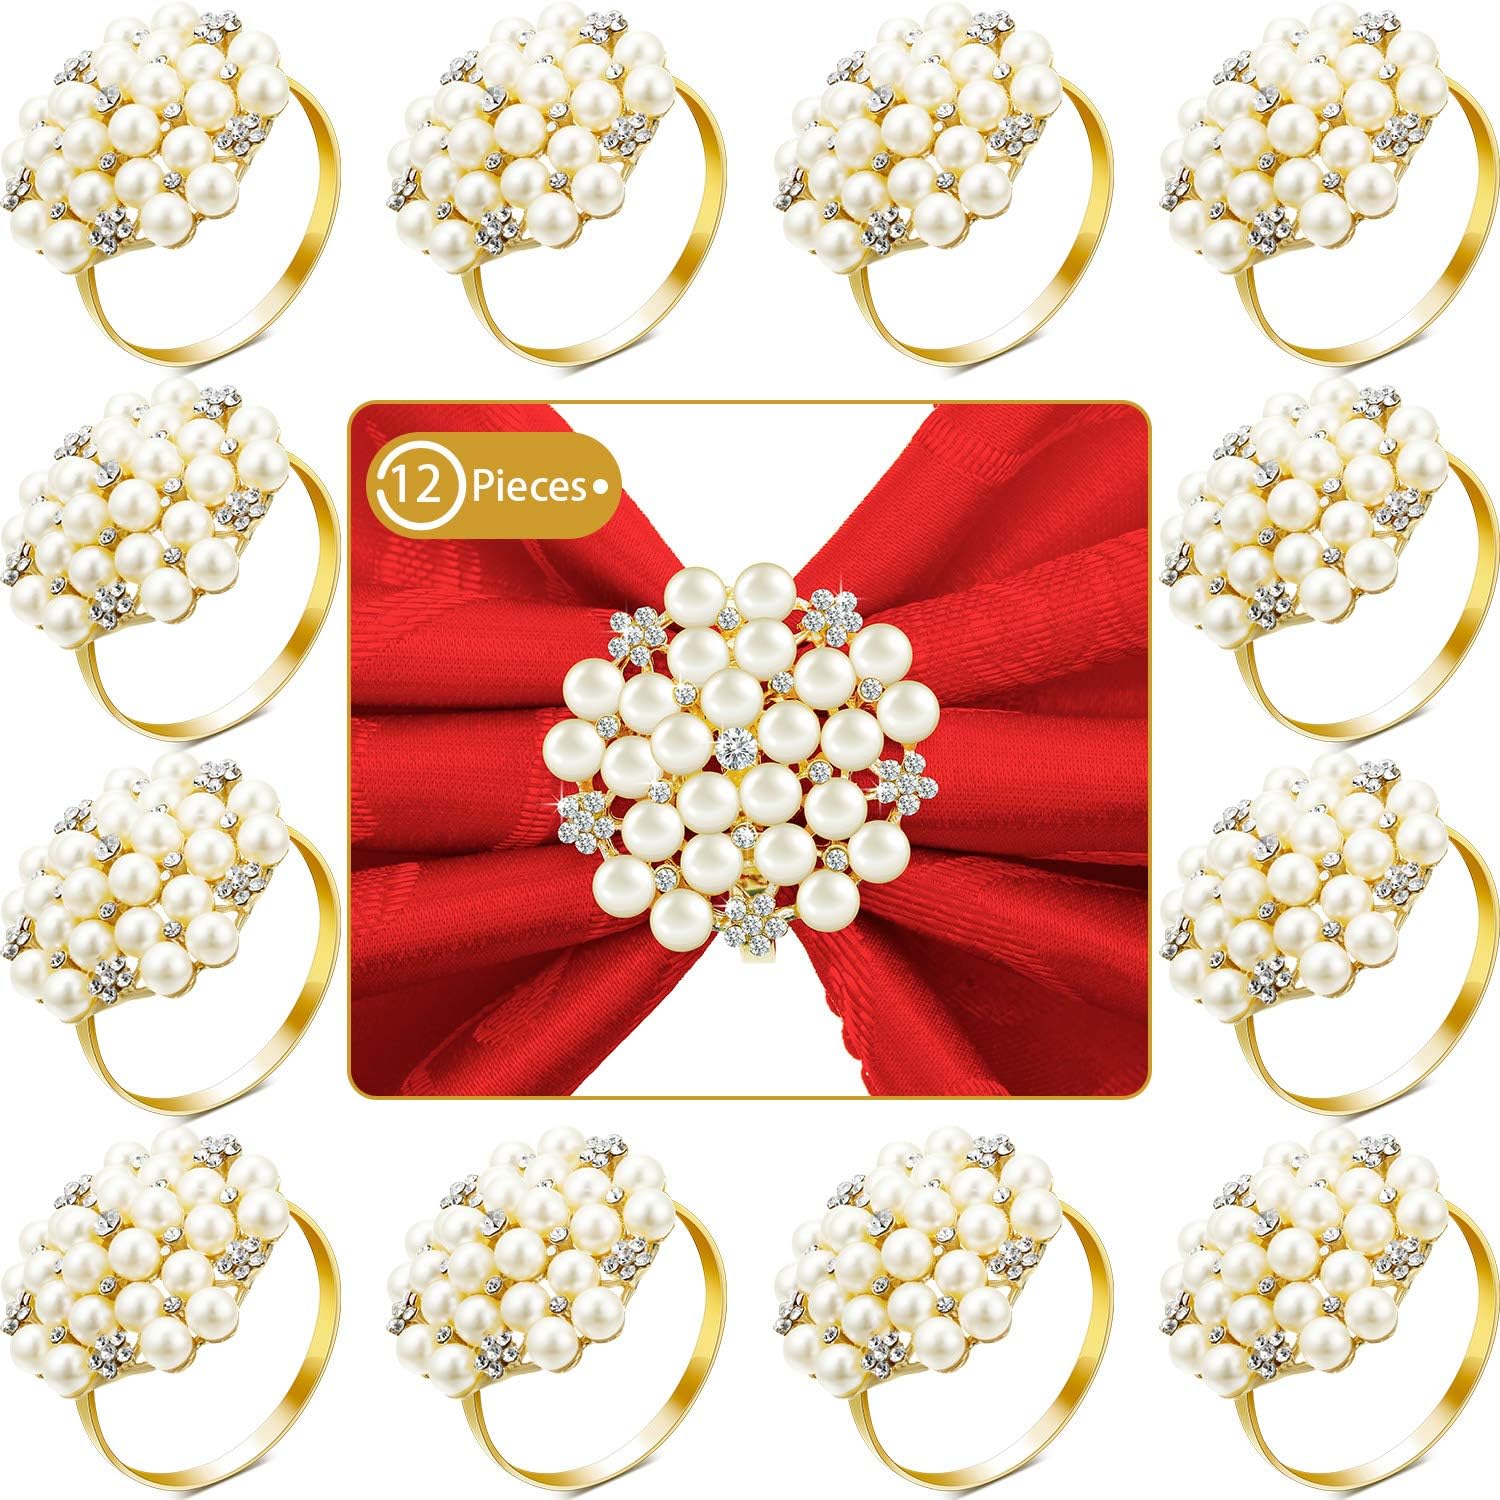 Bulk 12 Pcs Gold Pearl Flower Napkin Rings Wedding Party Decorations Wholesale